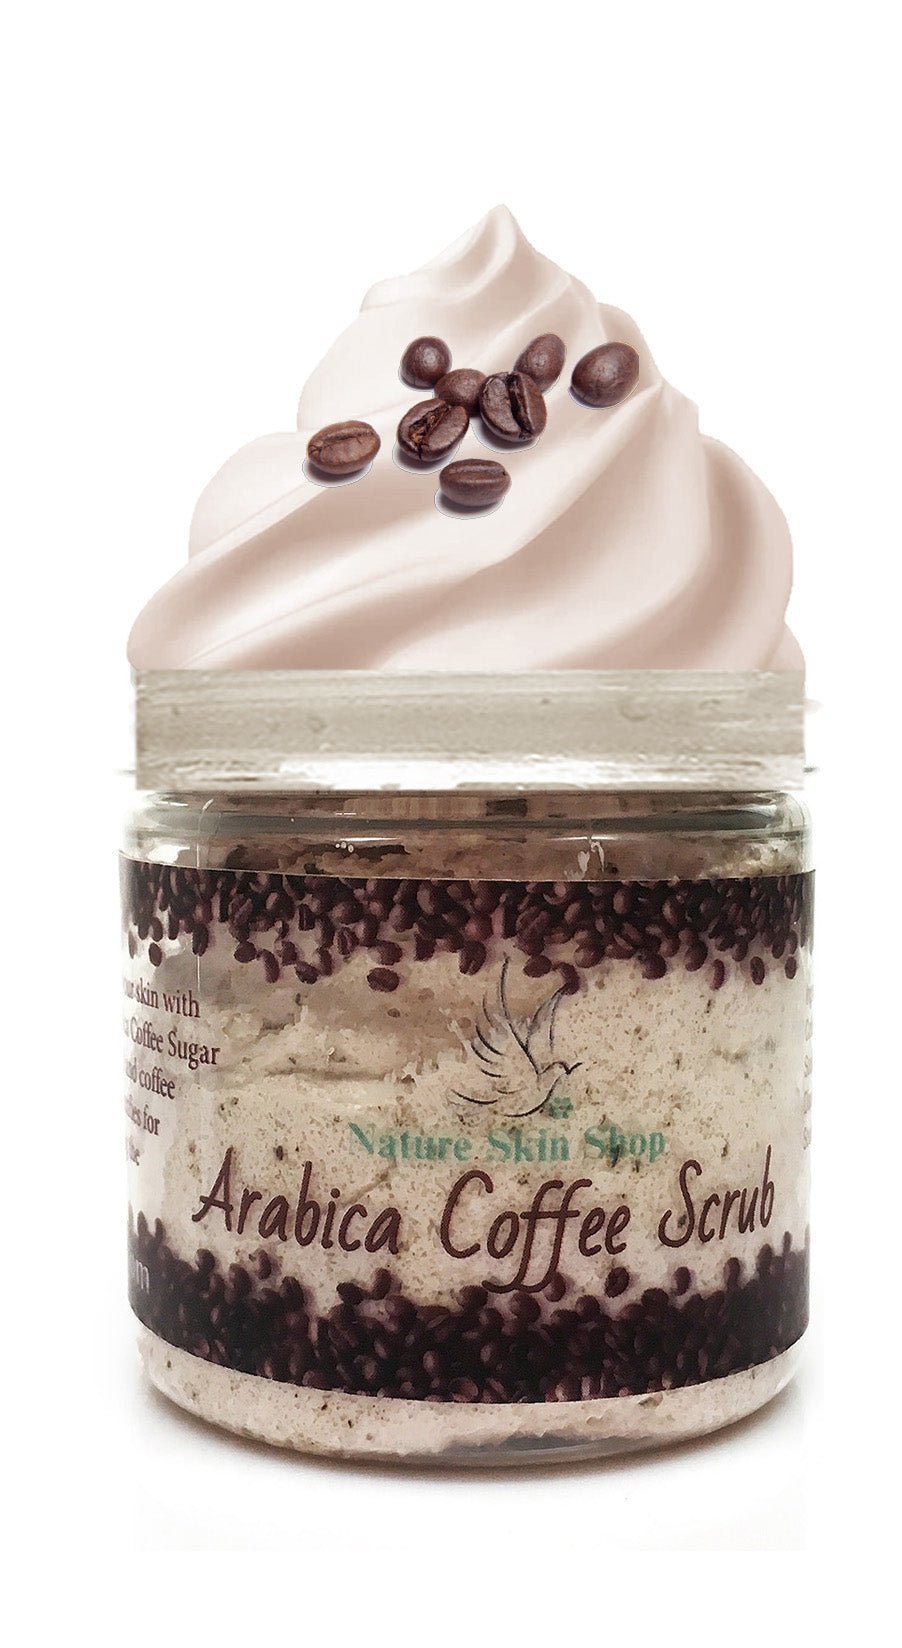 Arabica Coffee Whipped Sugar Scrub, 5 oz - Nature Skin Shop